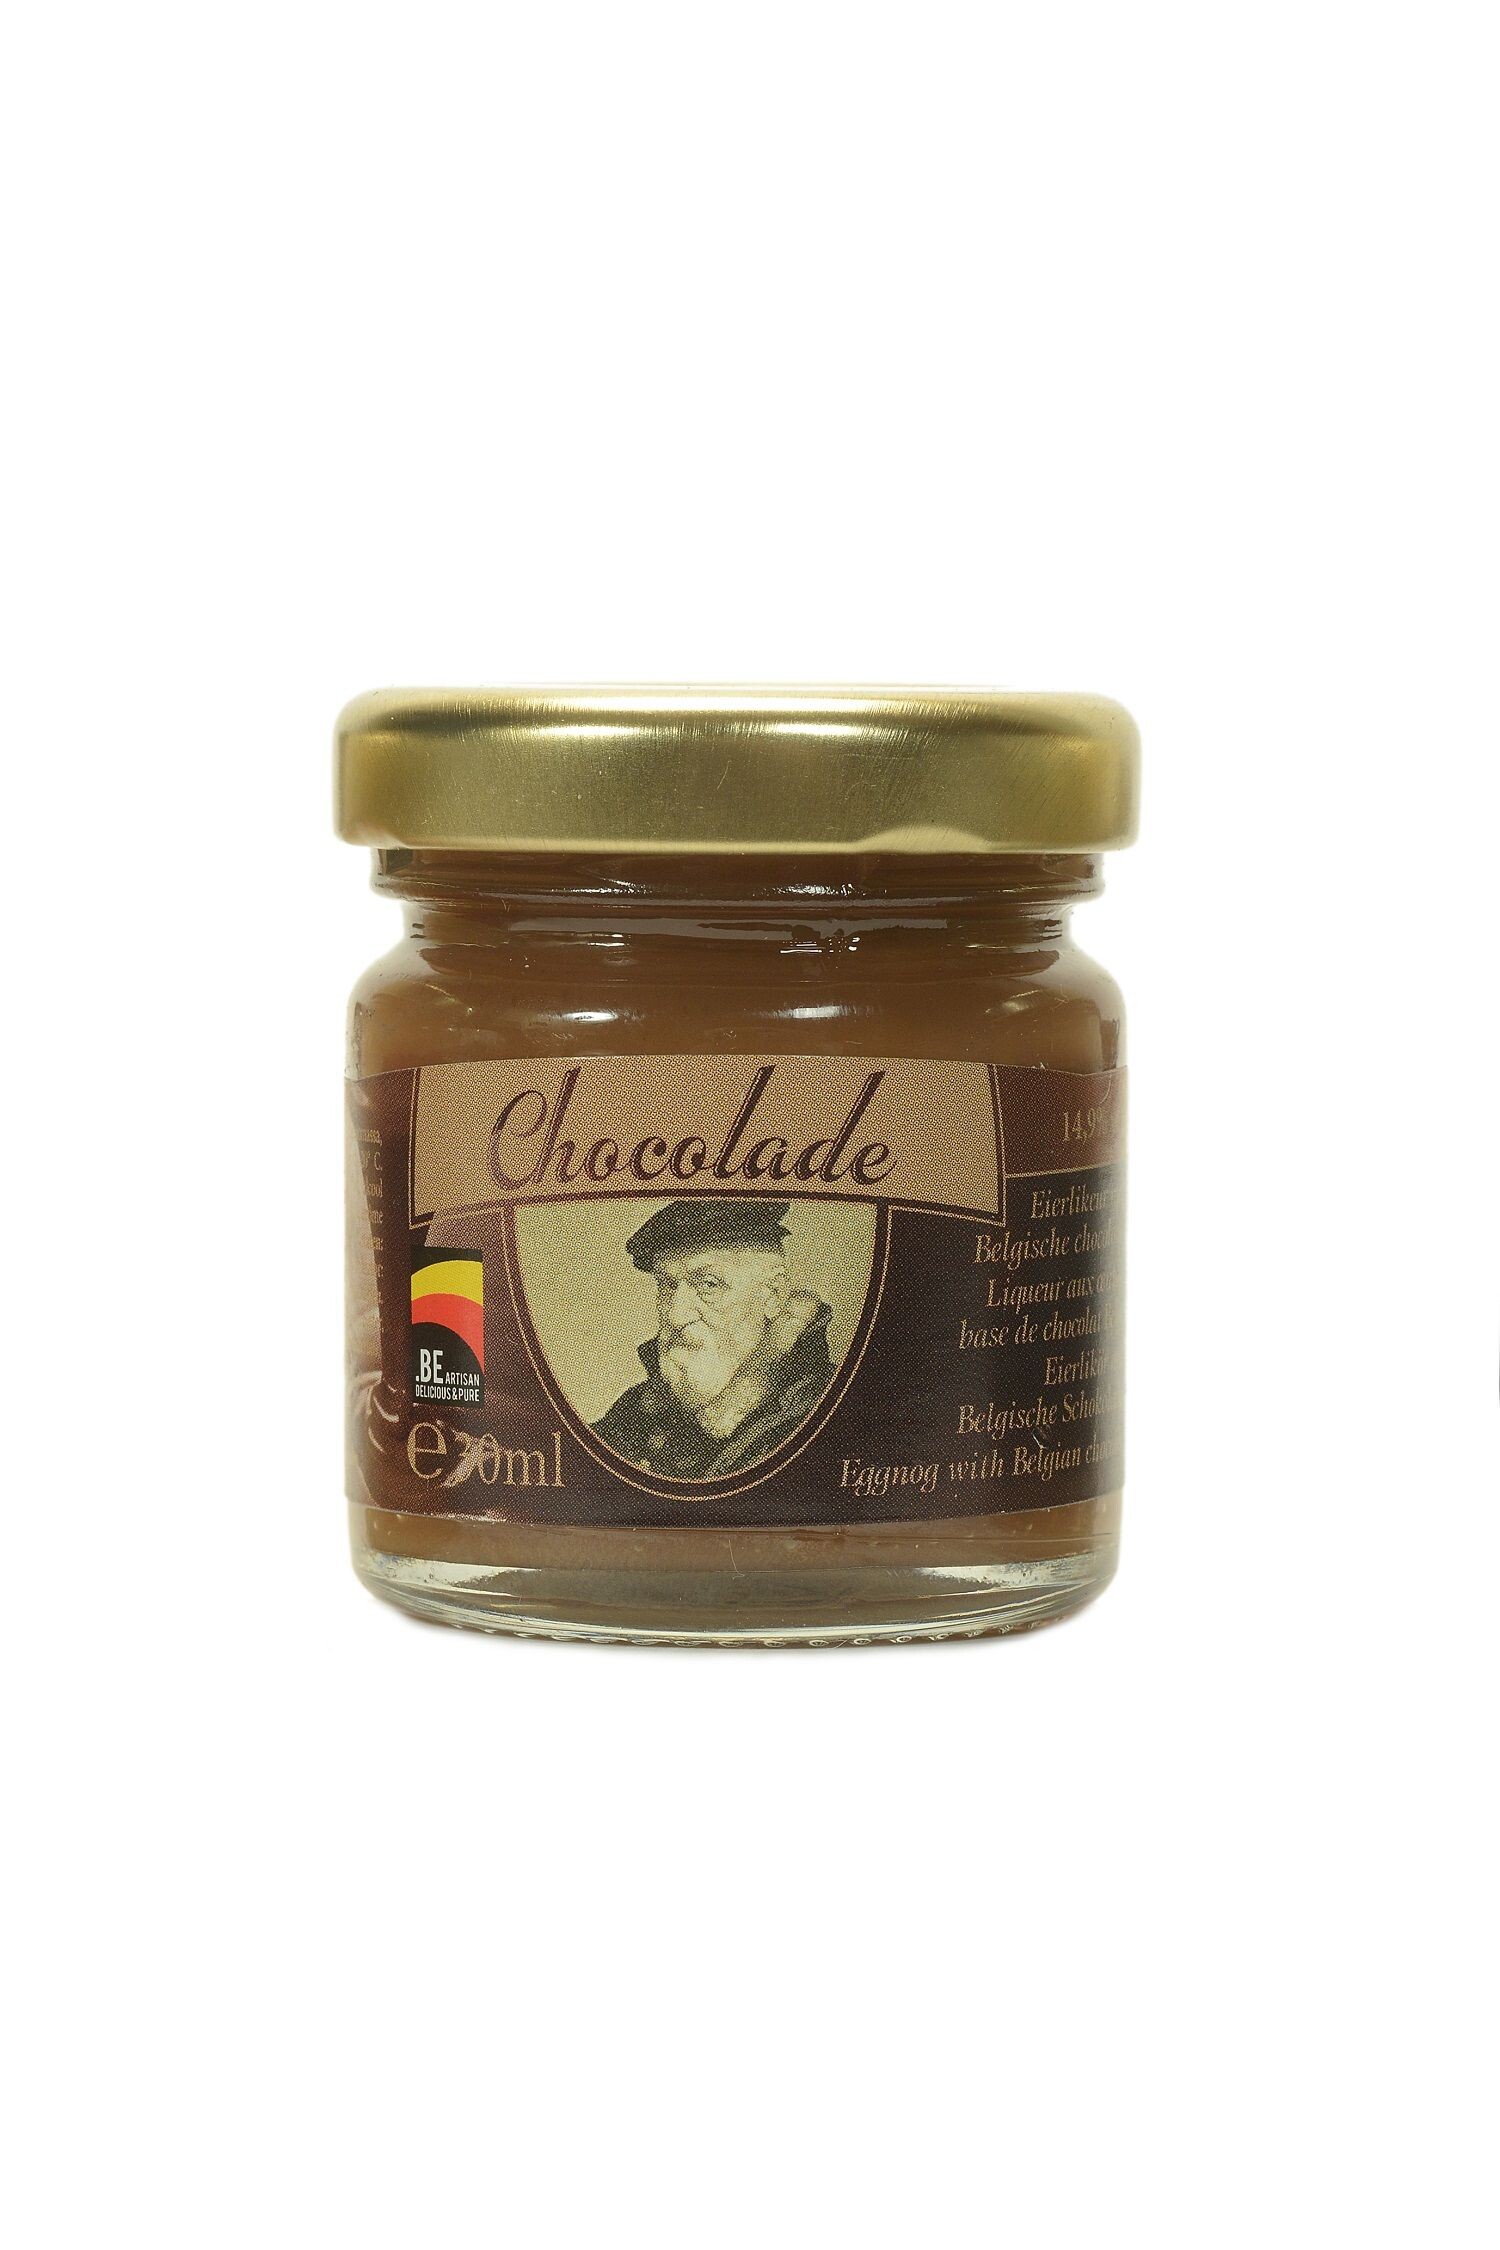 Delicious & Pure Eggnog Liqueur Den Ouden Advokaat Chocolate 30ml 14.9% small jar